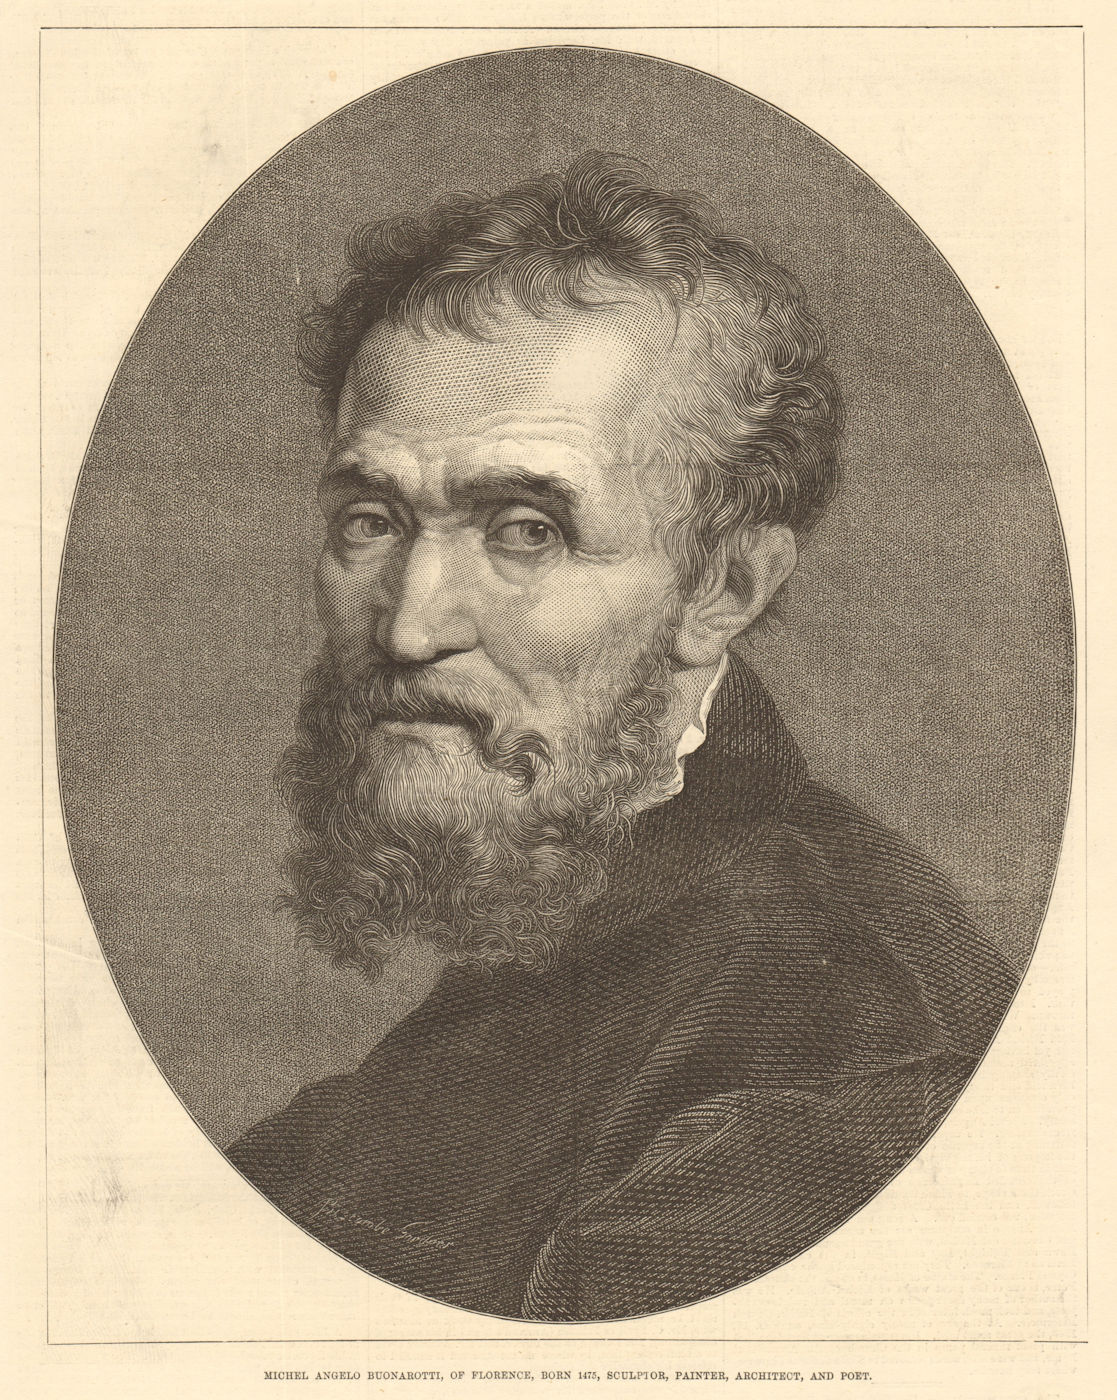 Associate Product Michelangelo Buonarotti, Florence, sculptor painter architec poet. Italy 1875